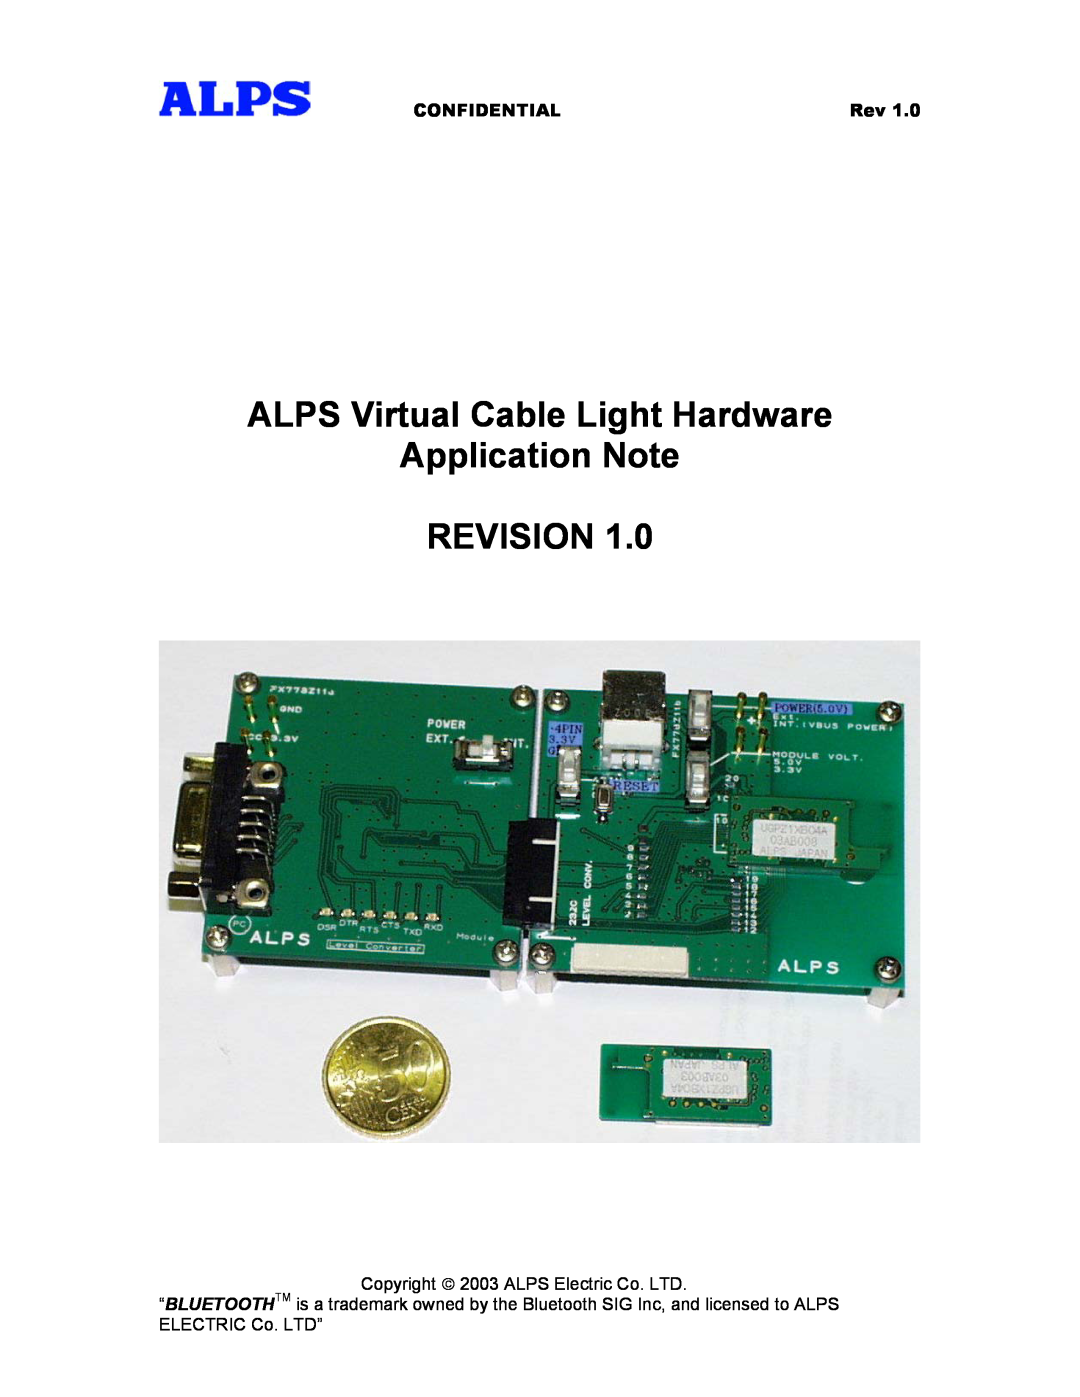 Alps Electric Virtual Cable Light Module manual ALPS Virtual Cable Light Hardware Application Note REVISION, Confidential 